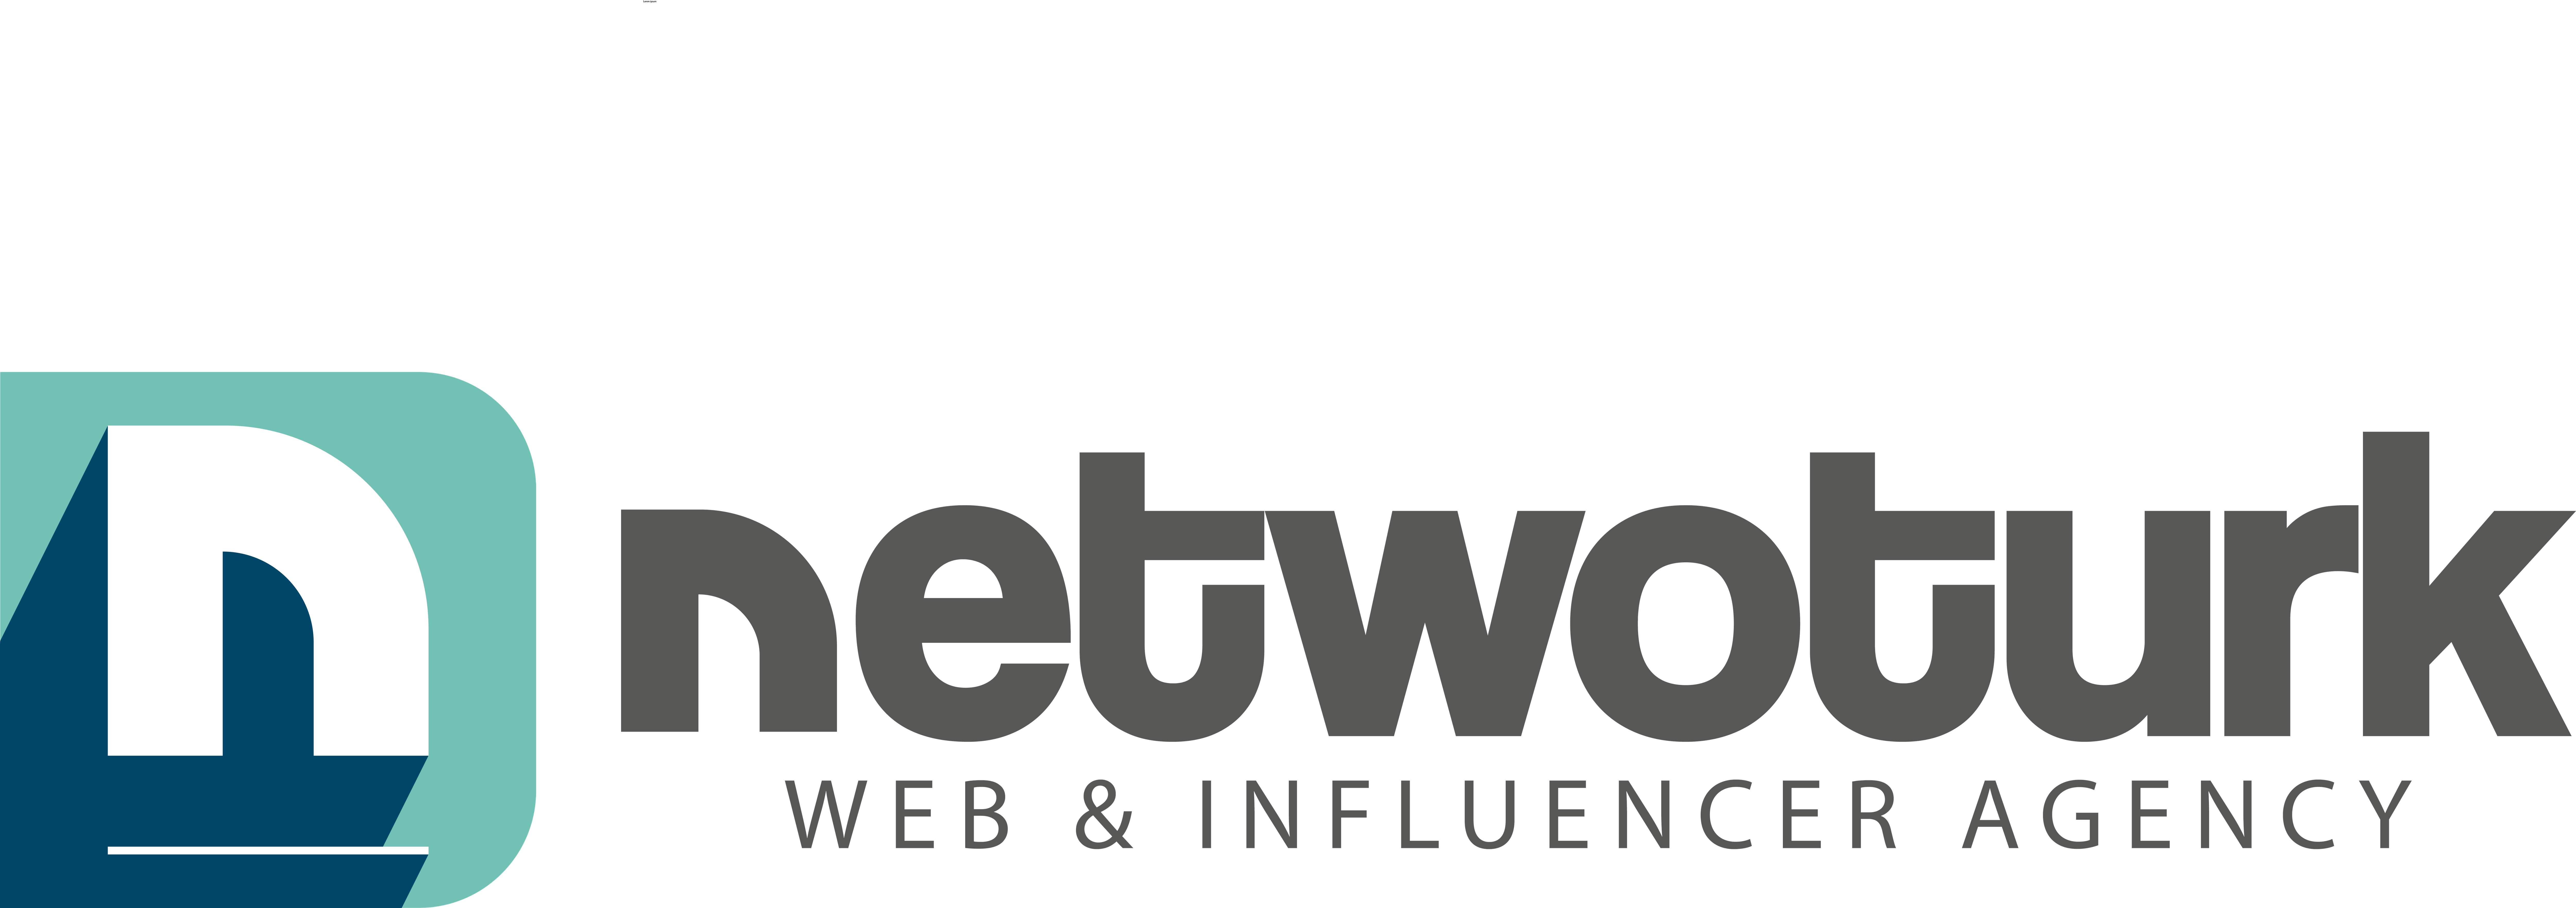 Netwoturk Web & Influancer Ajans